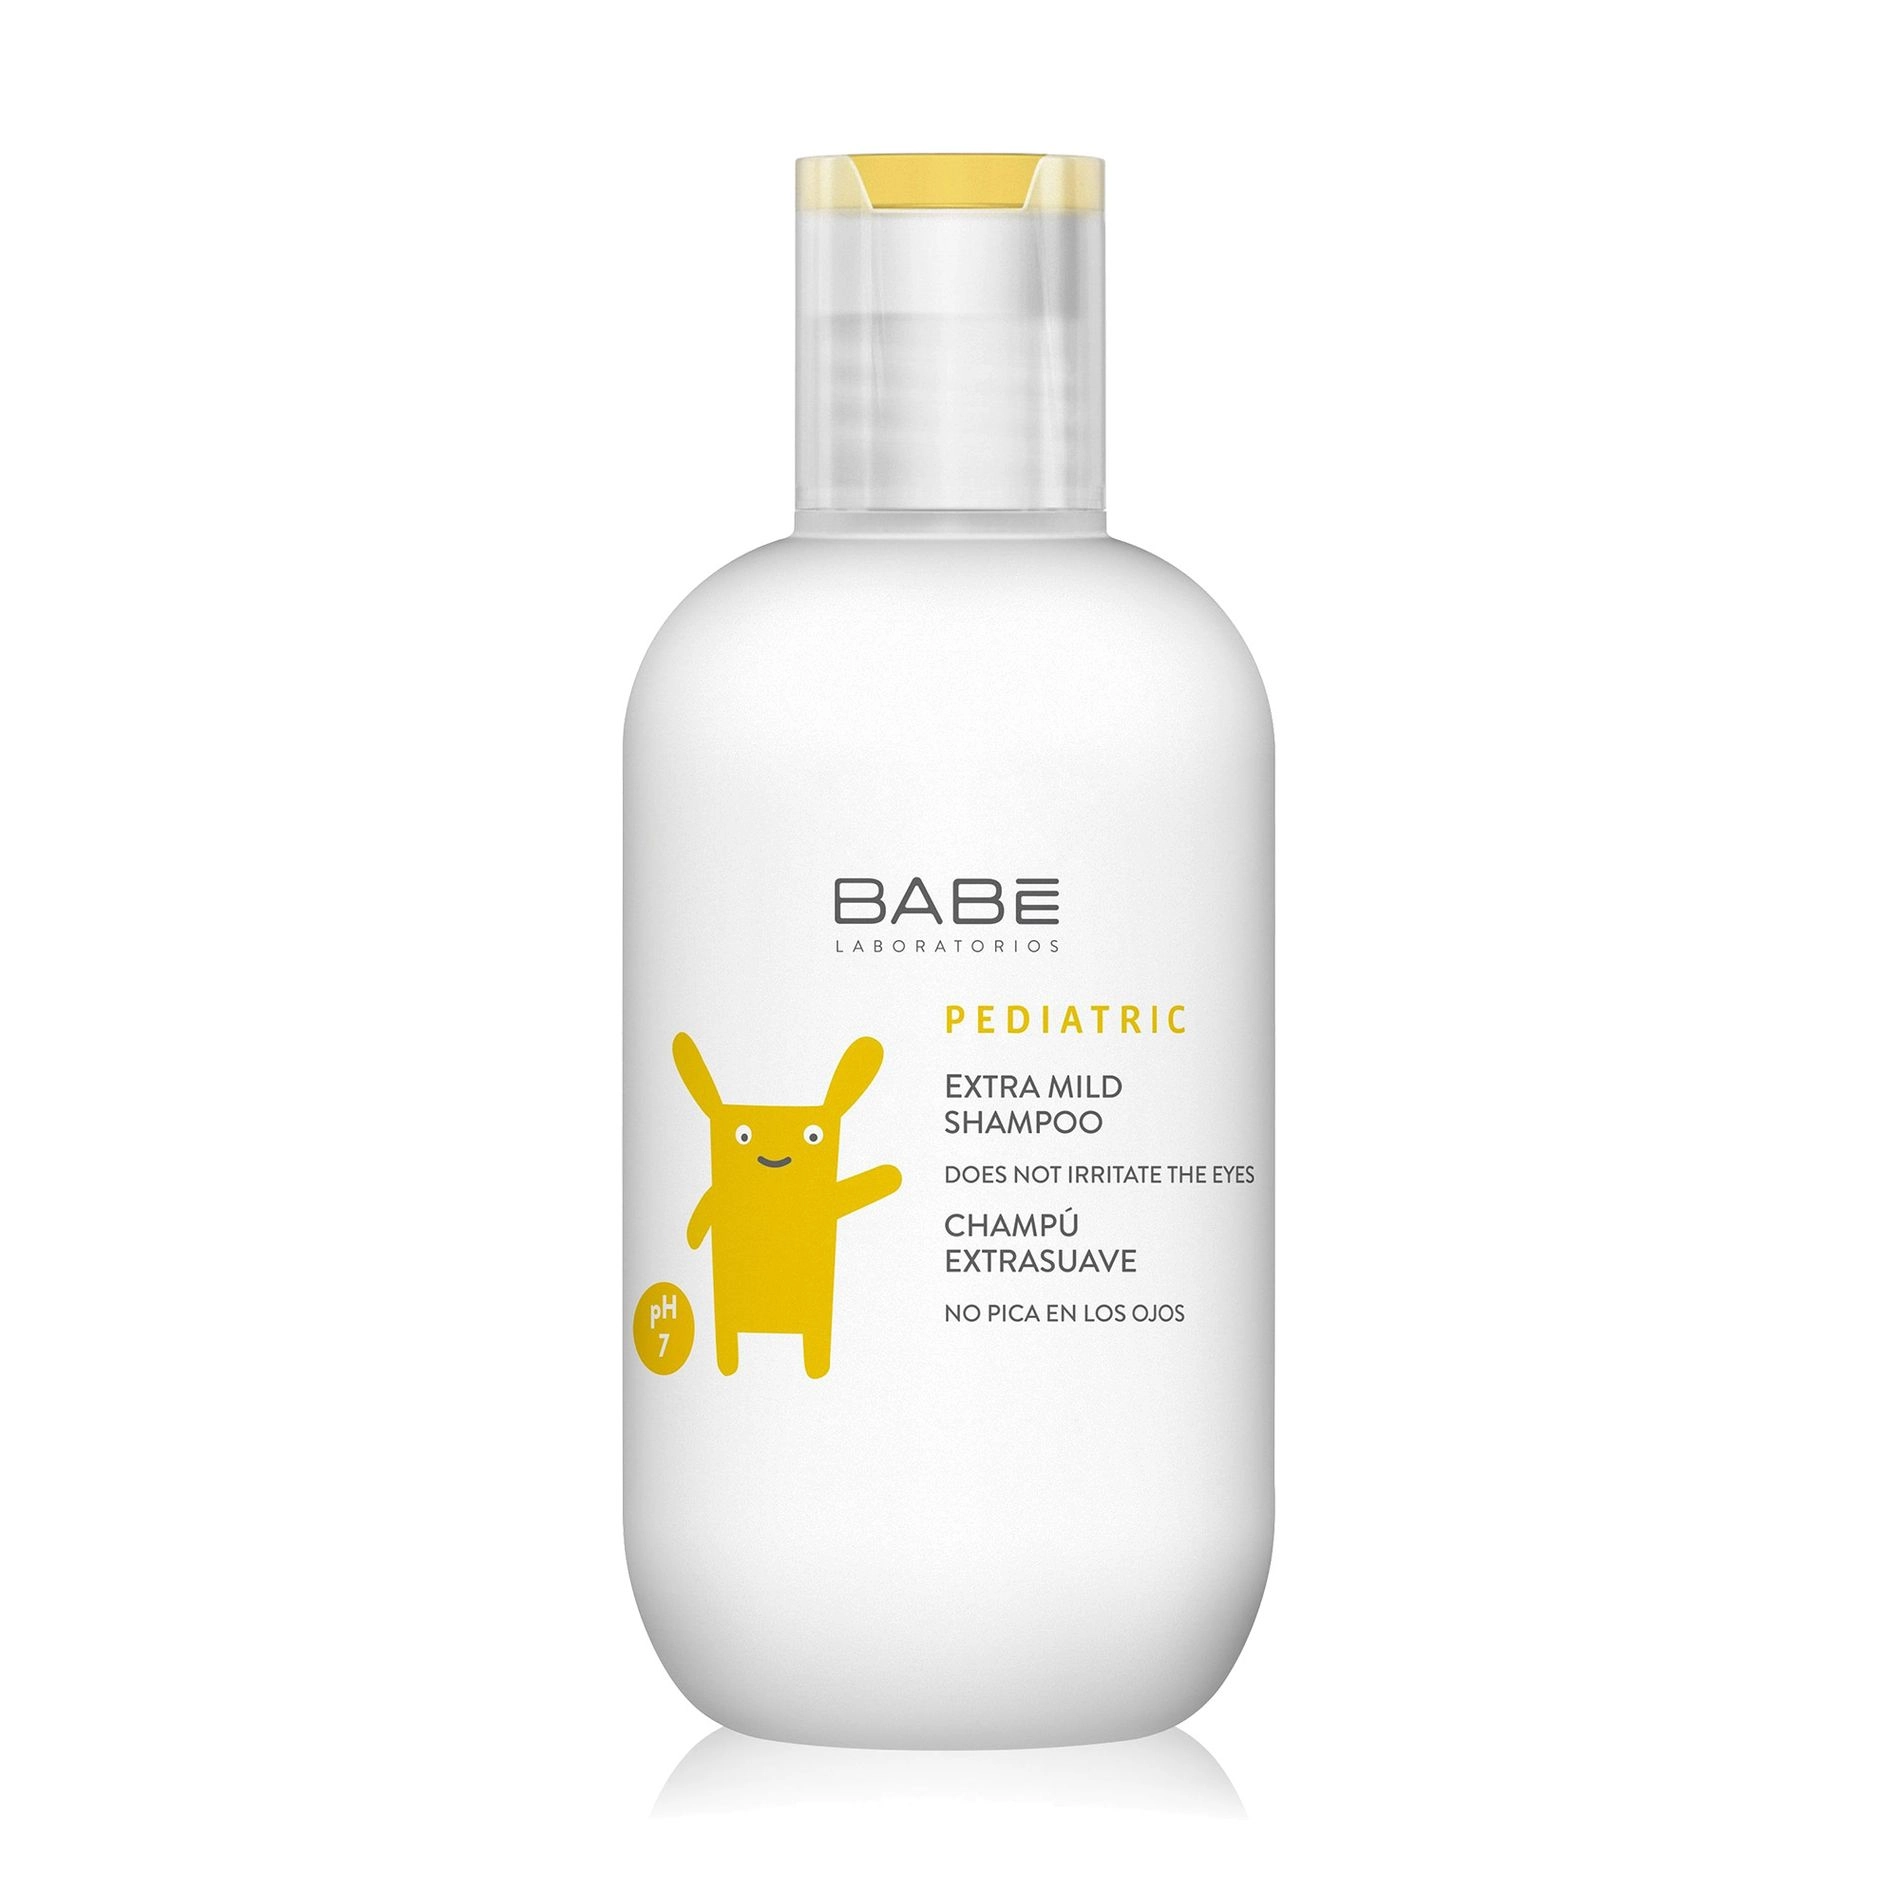 Супермягкий детский шампунь с кондиционером - BABE Laboratorios PEDIATRIC Extra Mild Shampoo, 200 мл - фото N3